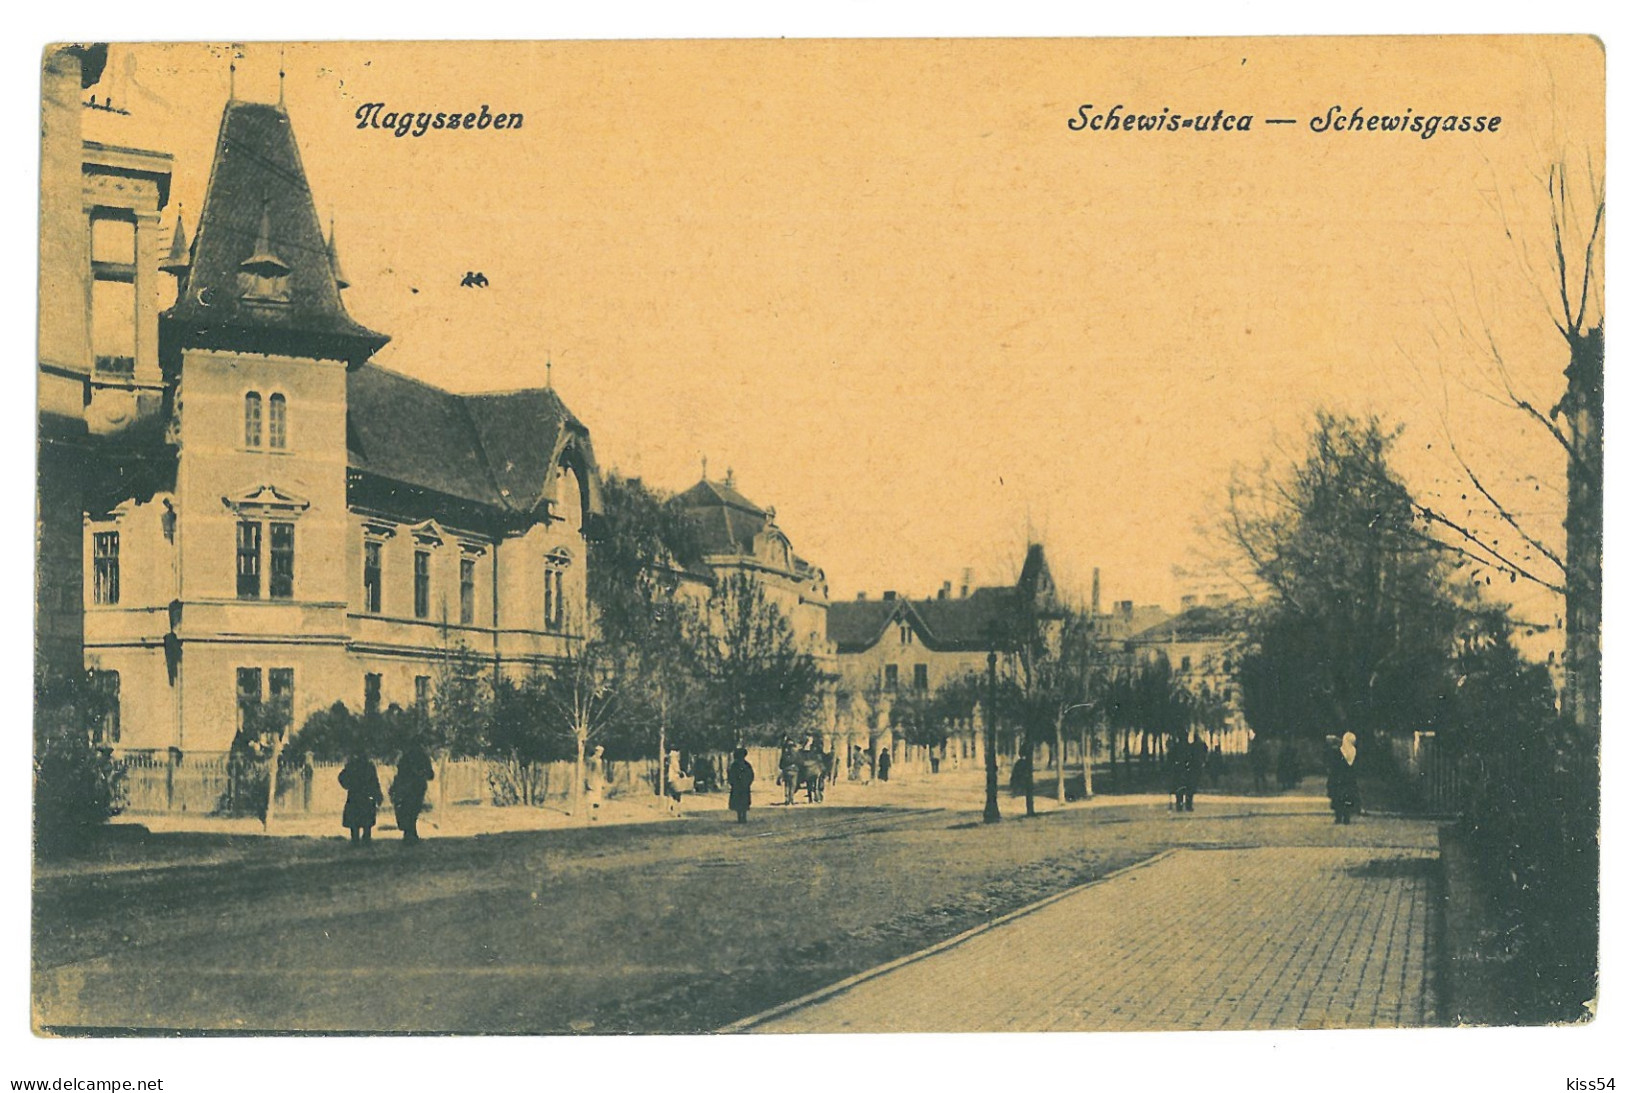 RO 33 - 22735 SIBIU, Market, Romania - Old Postcard - Used - Rumänien